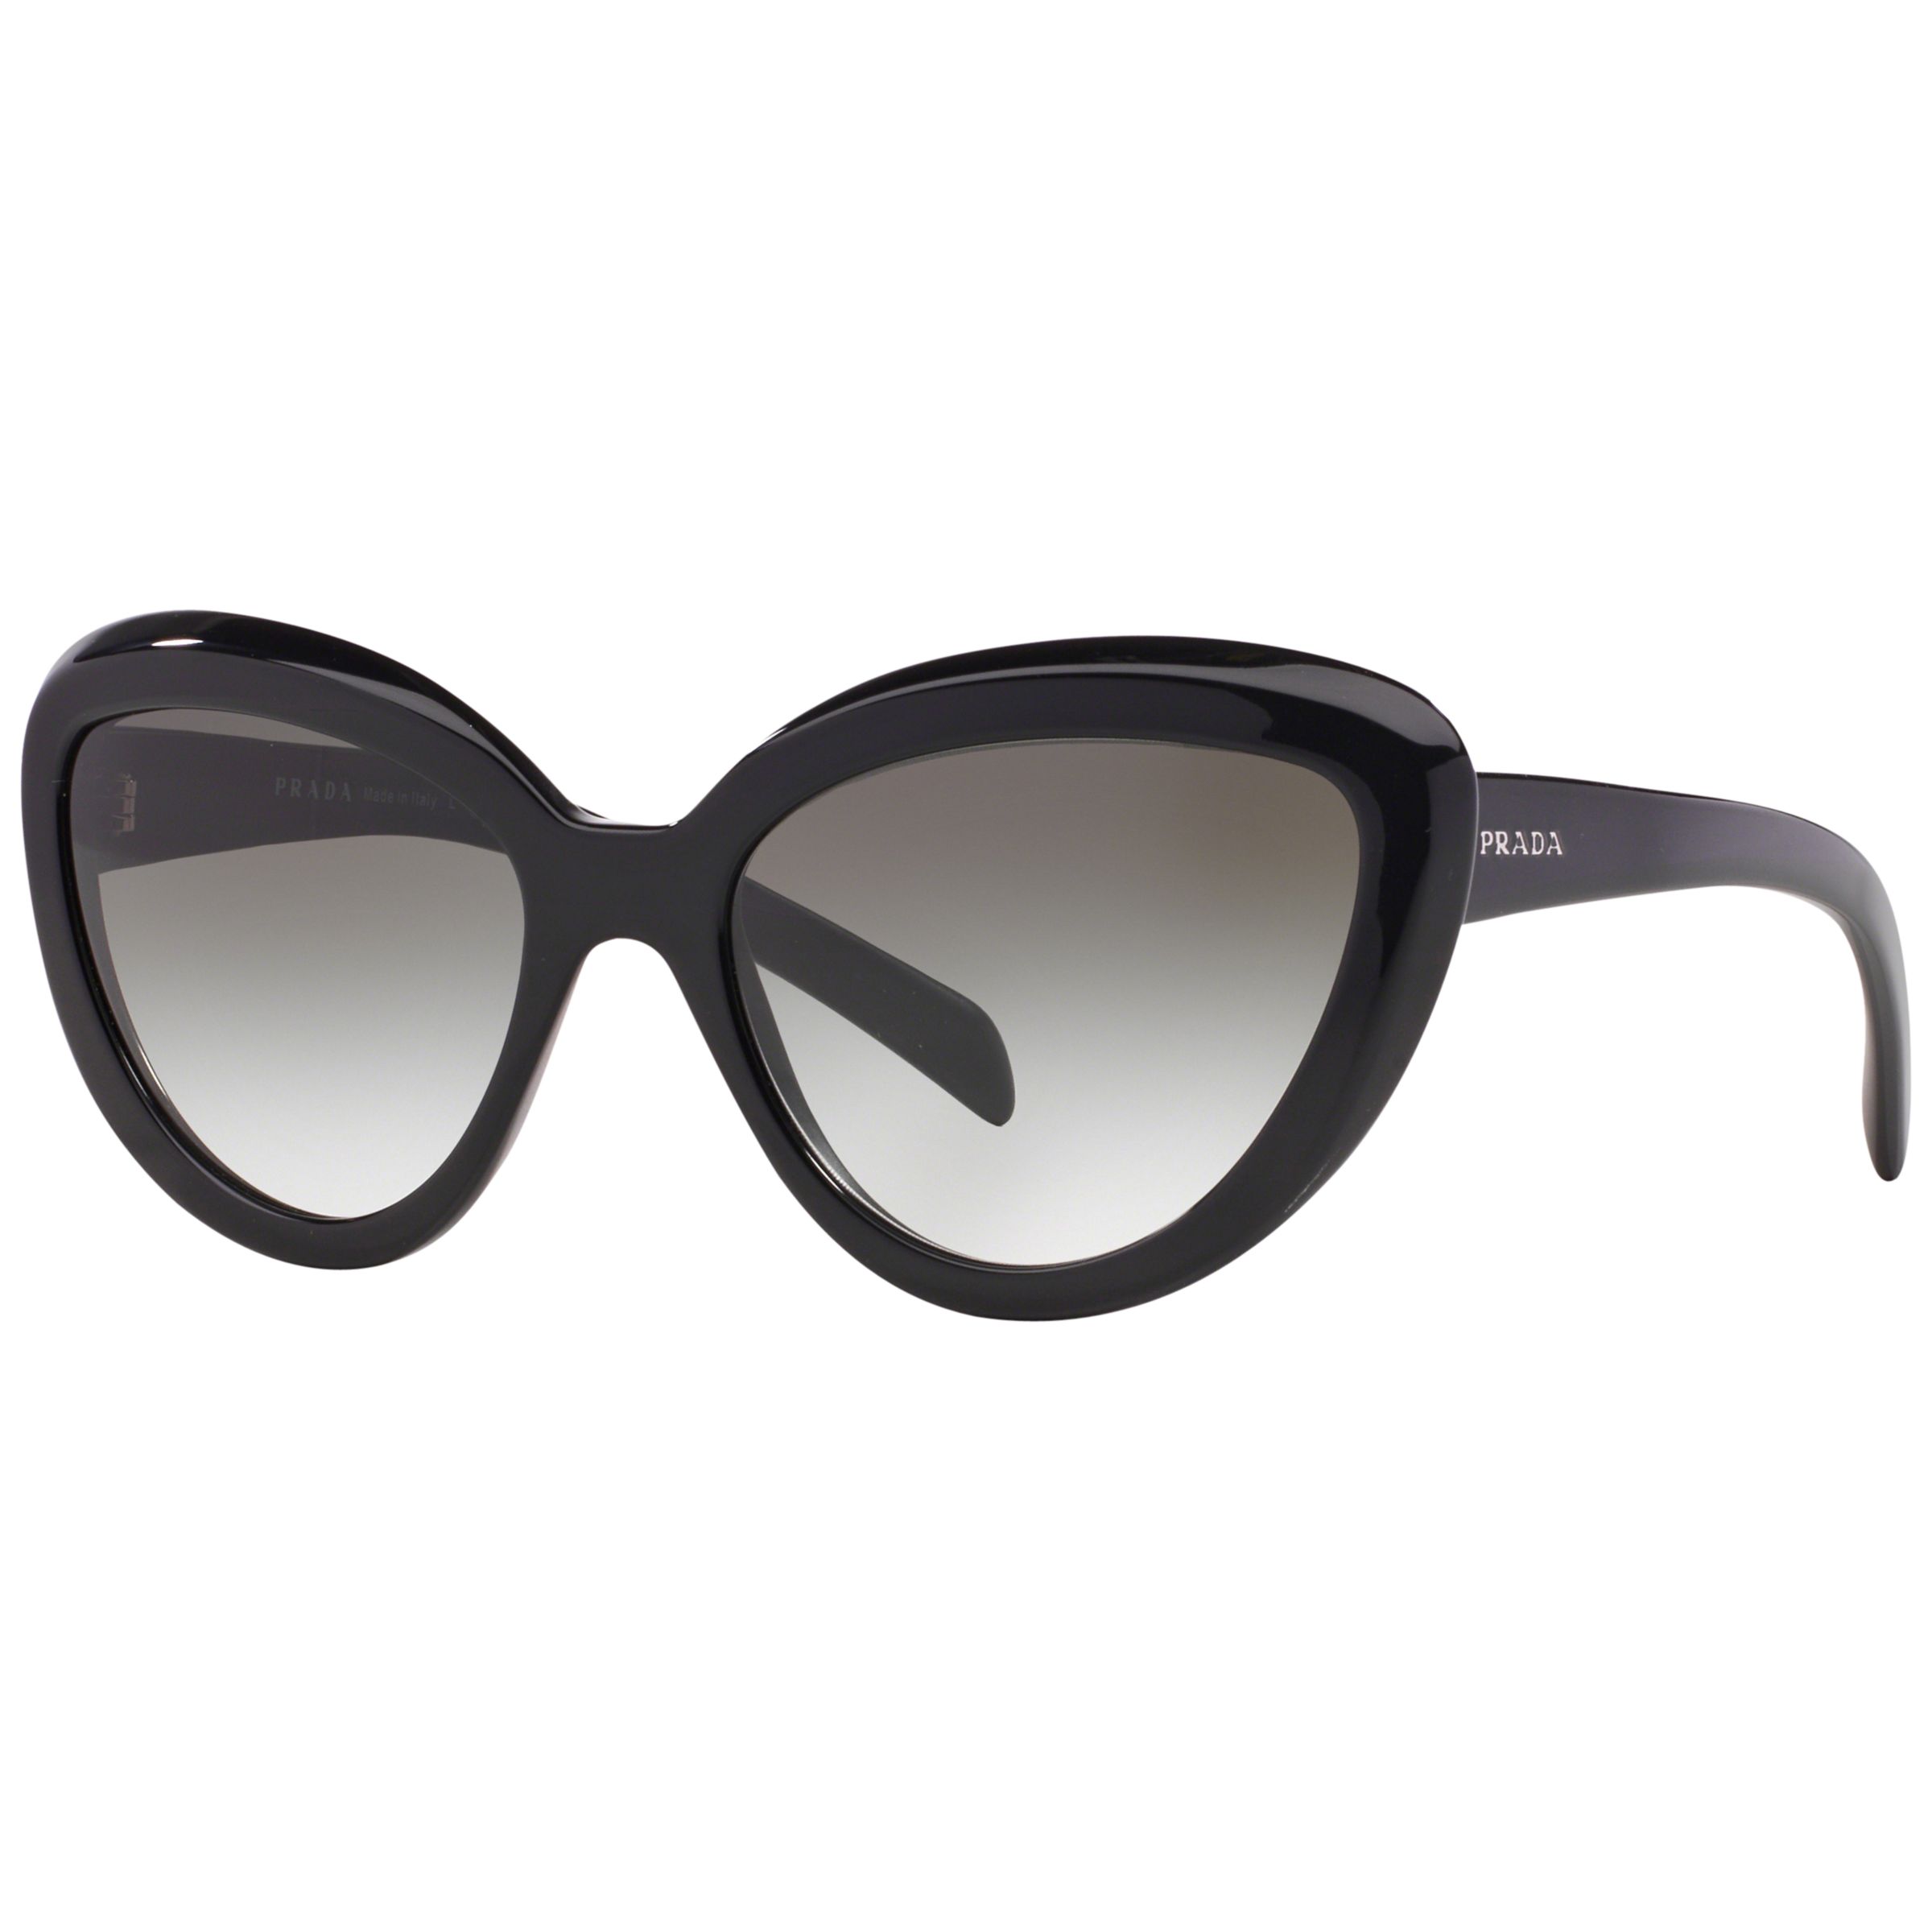 prada black cat eye sunglasses